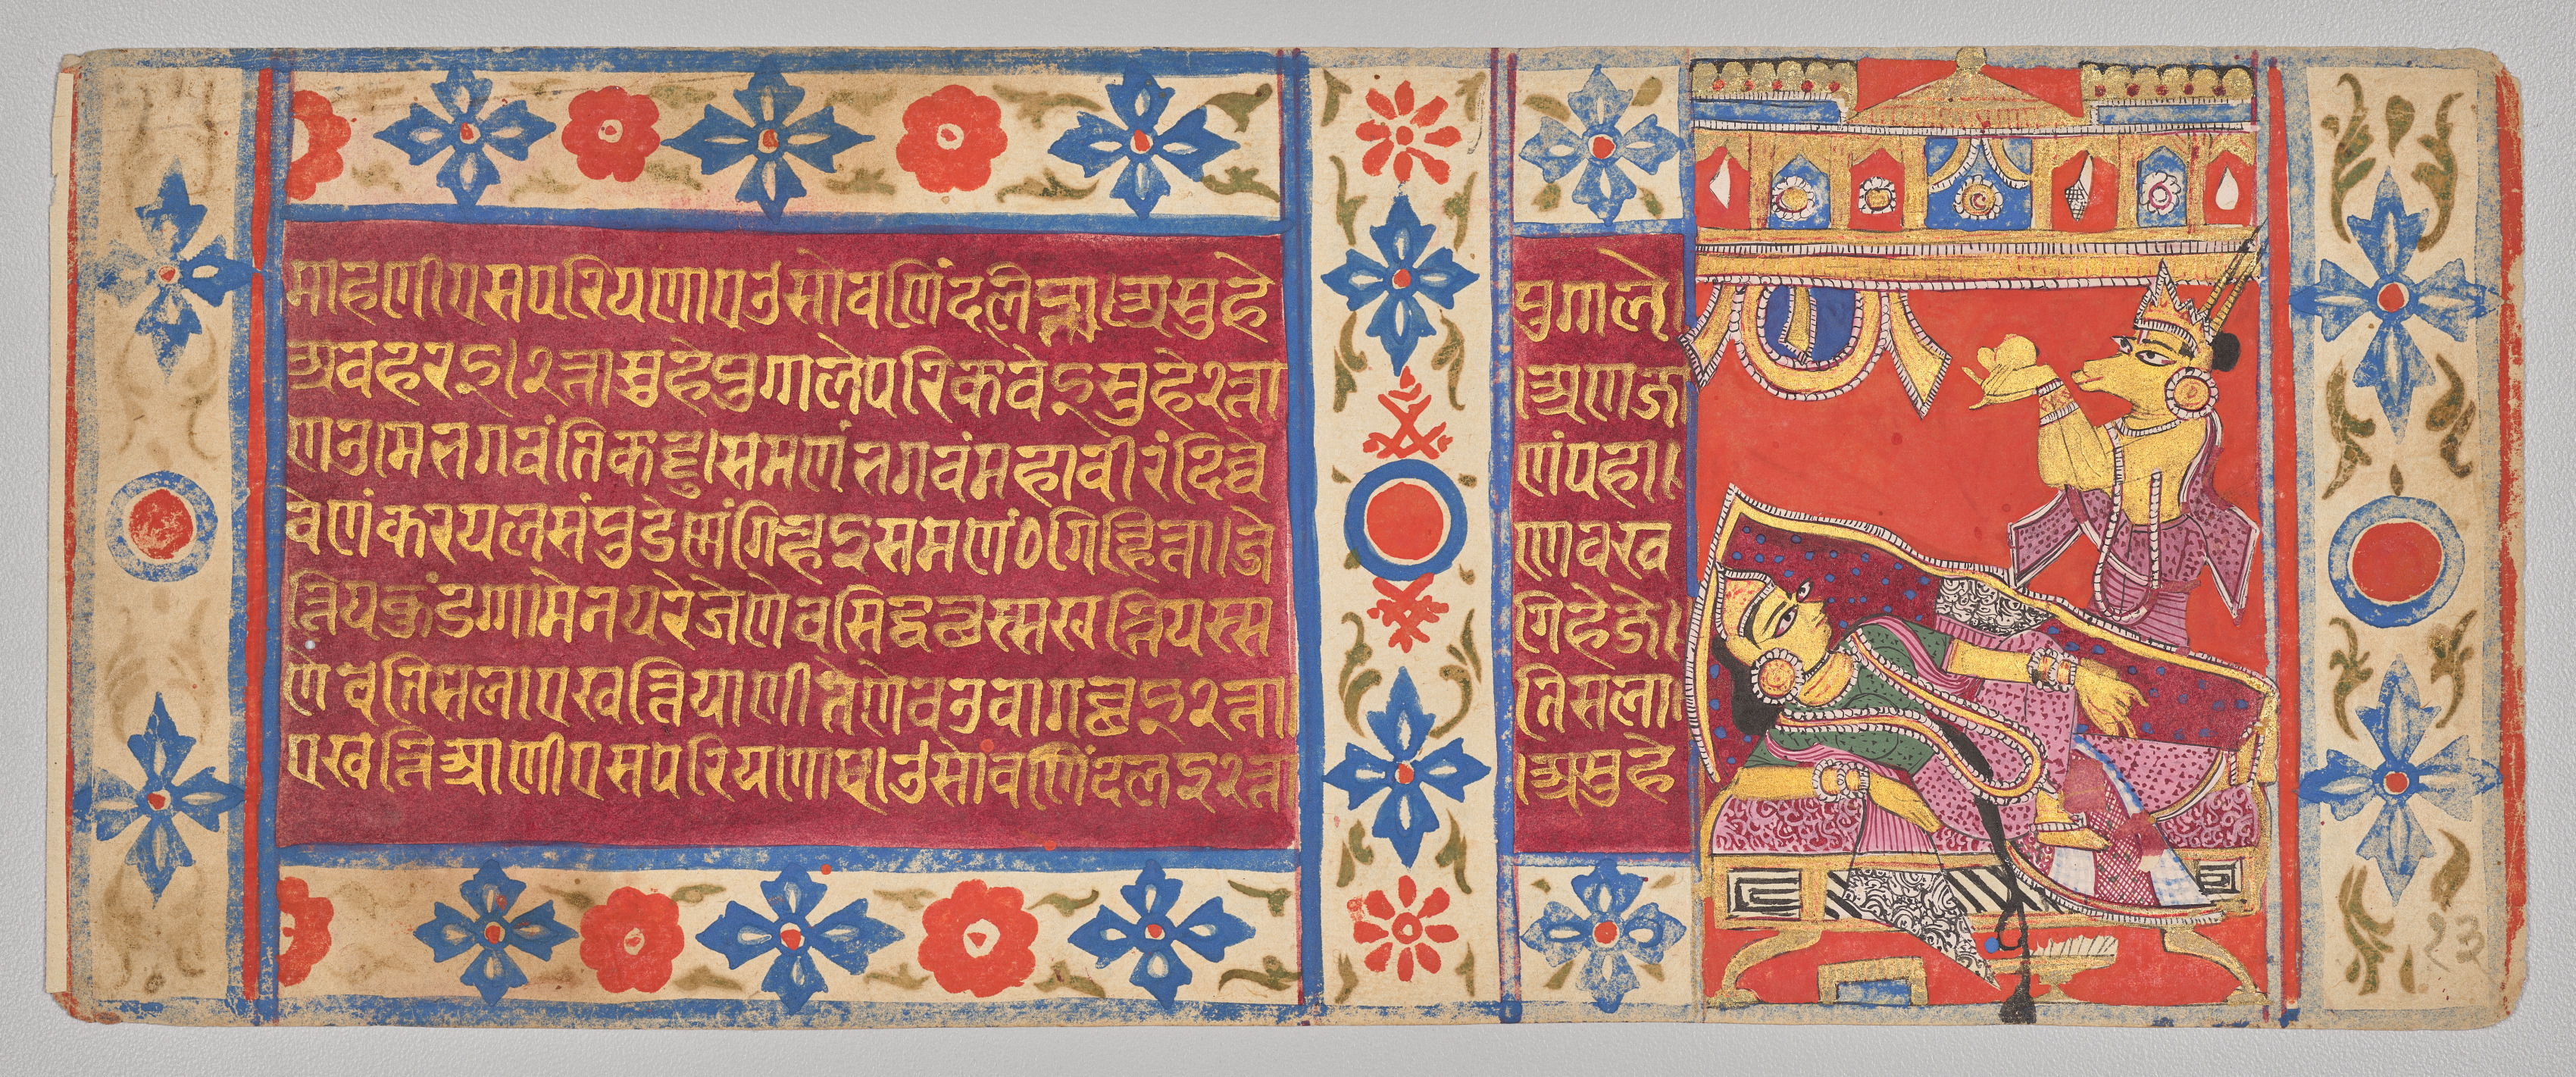 Transfer of the embryo, folio 13 (verso) from a Kalpa-sutra